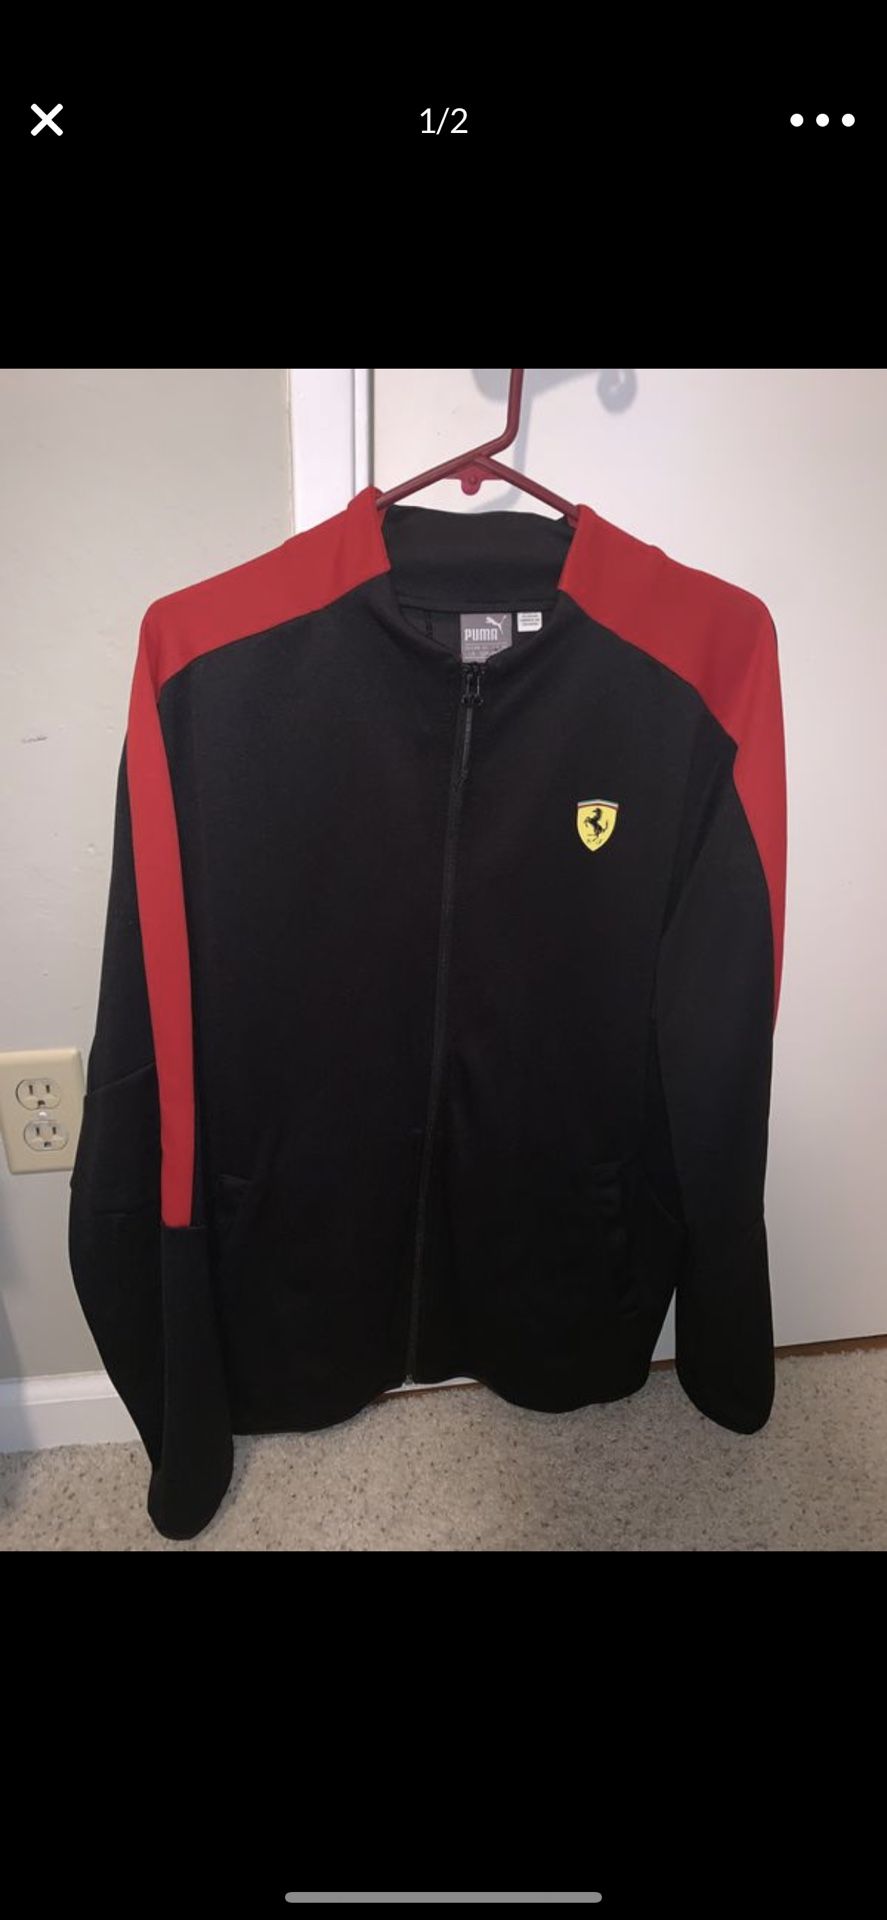 Ferrari Puma Jacket Size Large Brand New